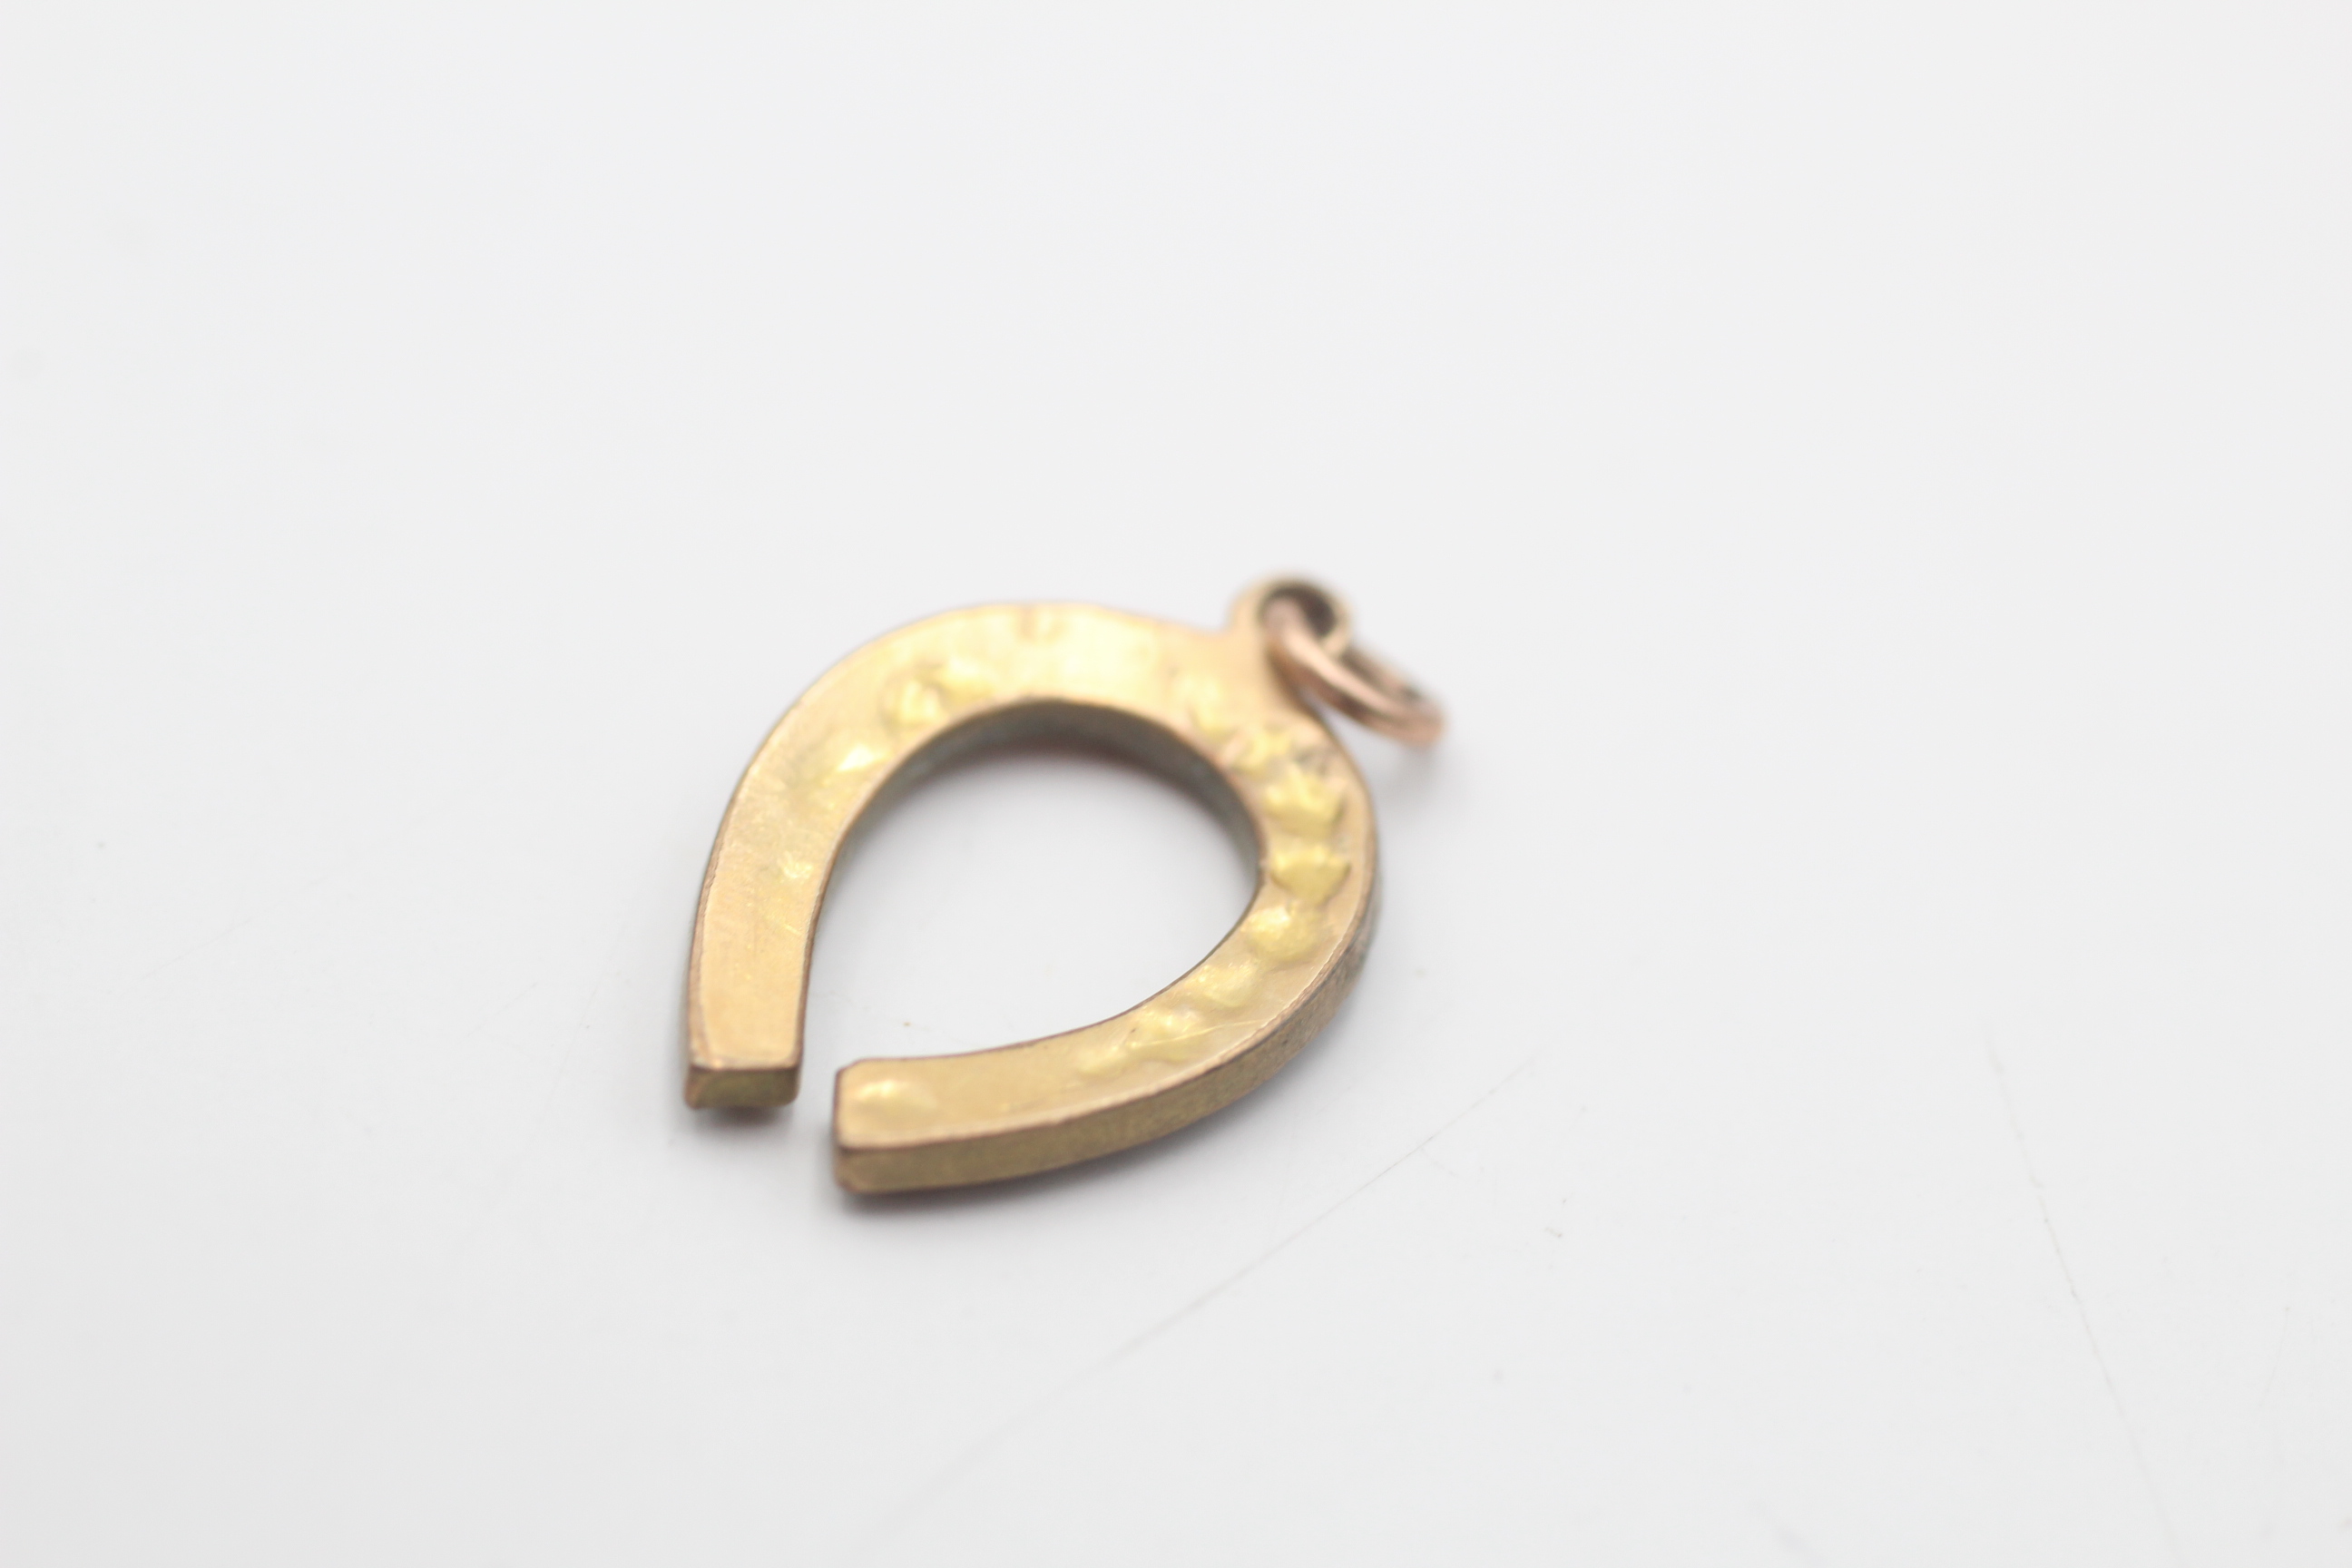 9ct gold bail vintage Bohemian garnet lucky horseshoe pendant (0.9g) - Image 4 of 4